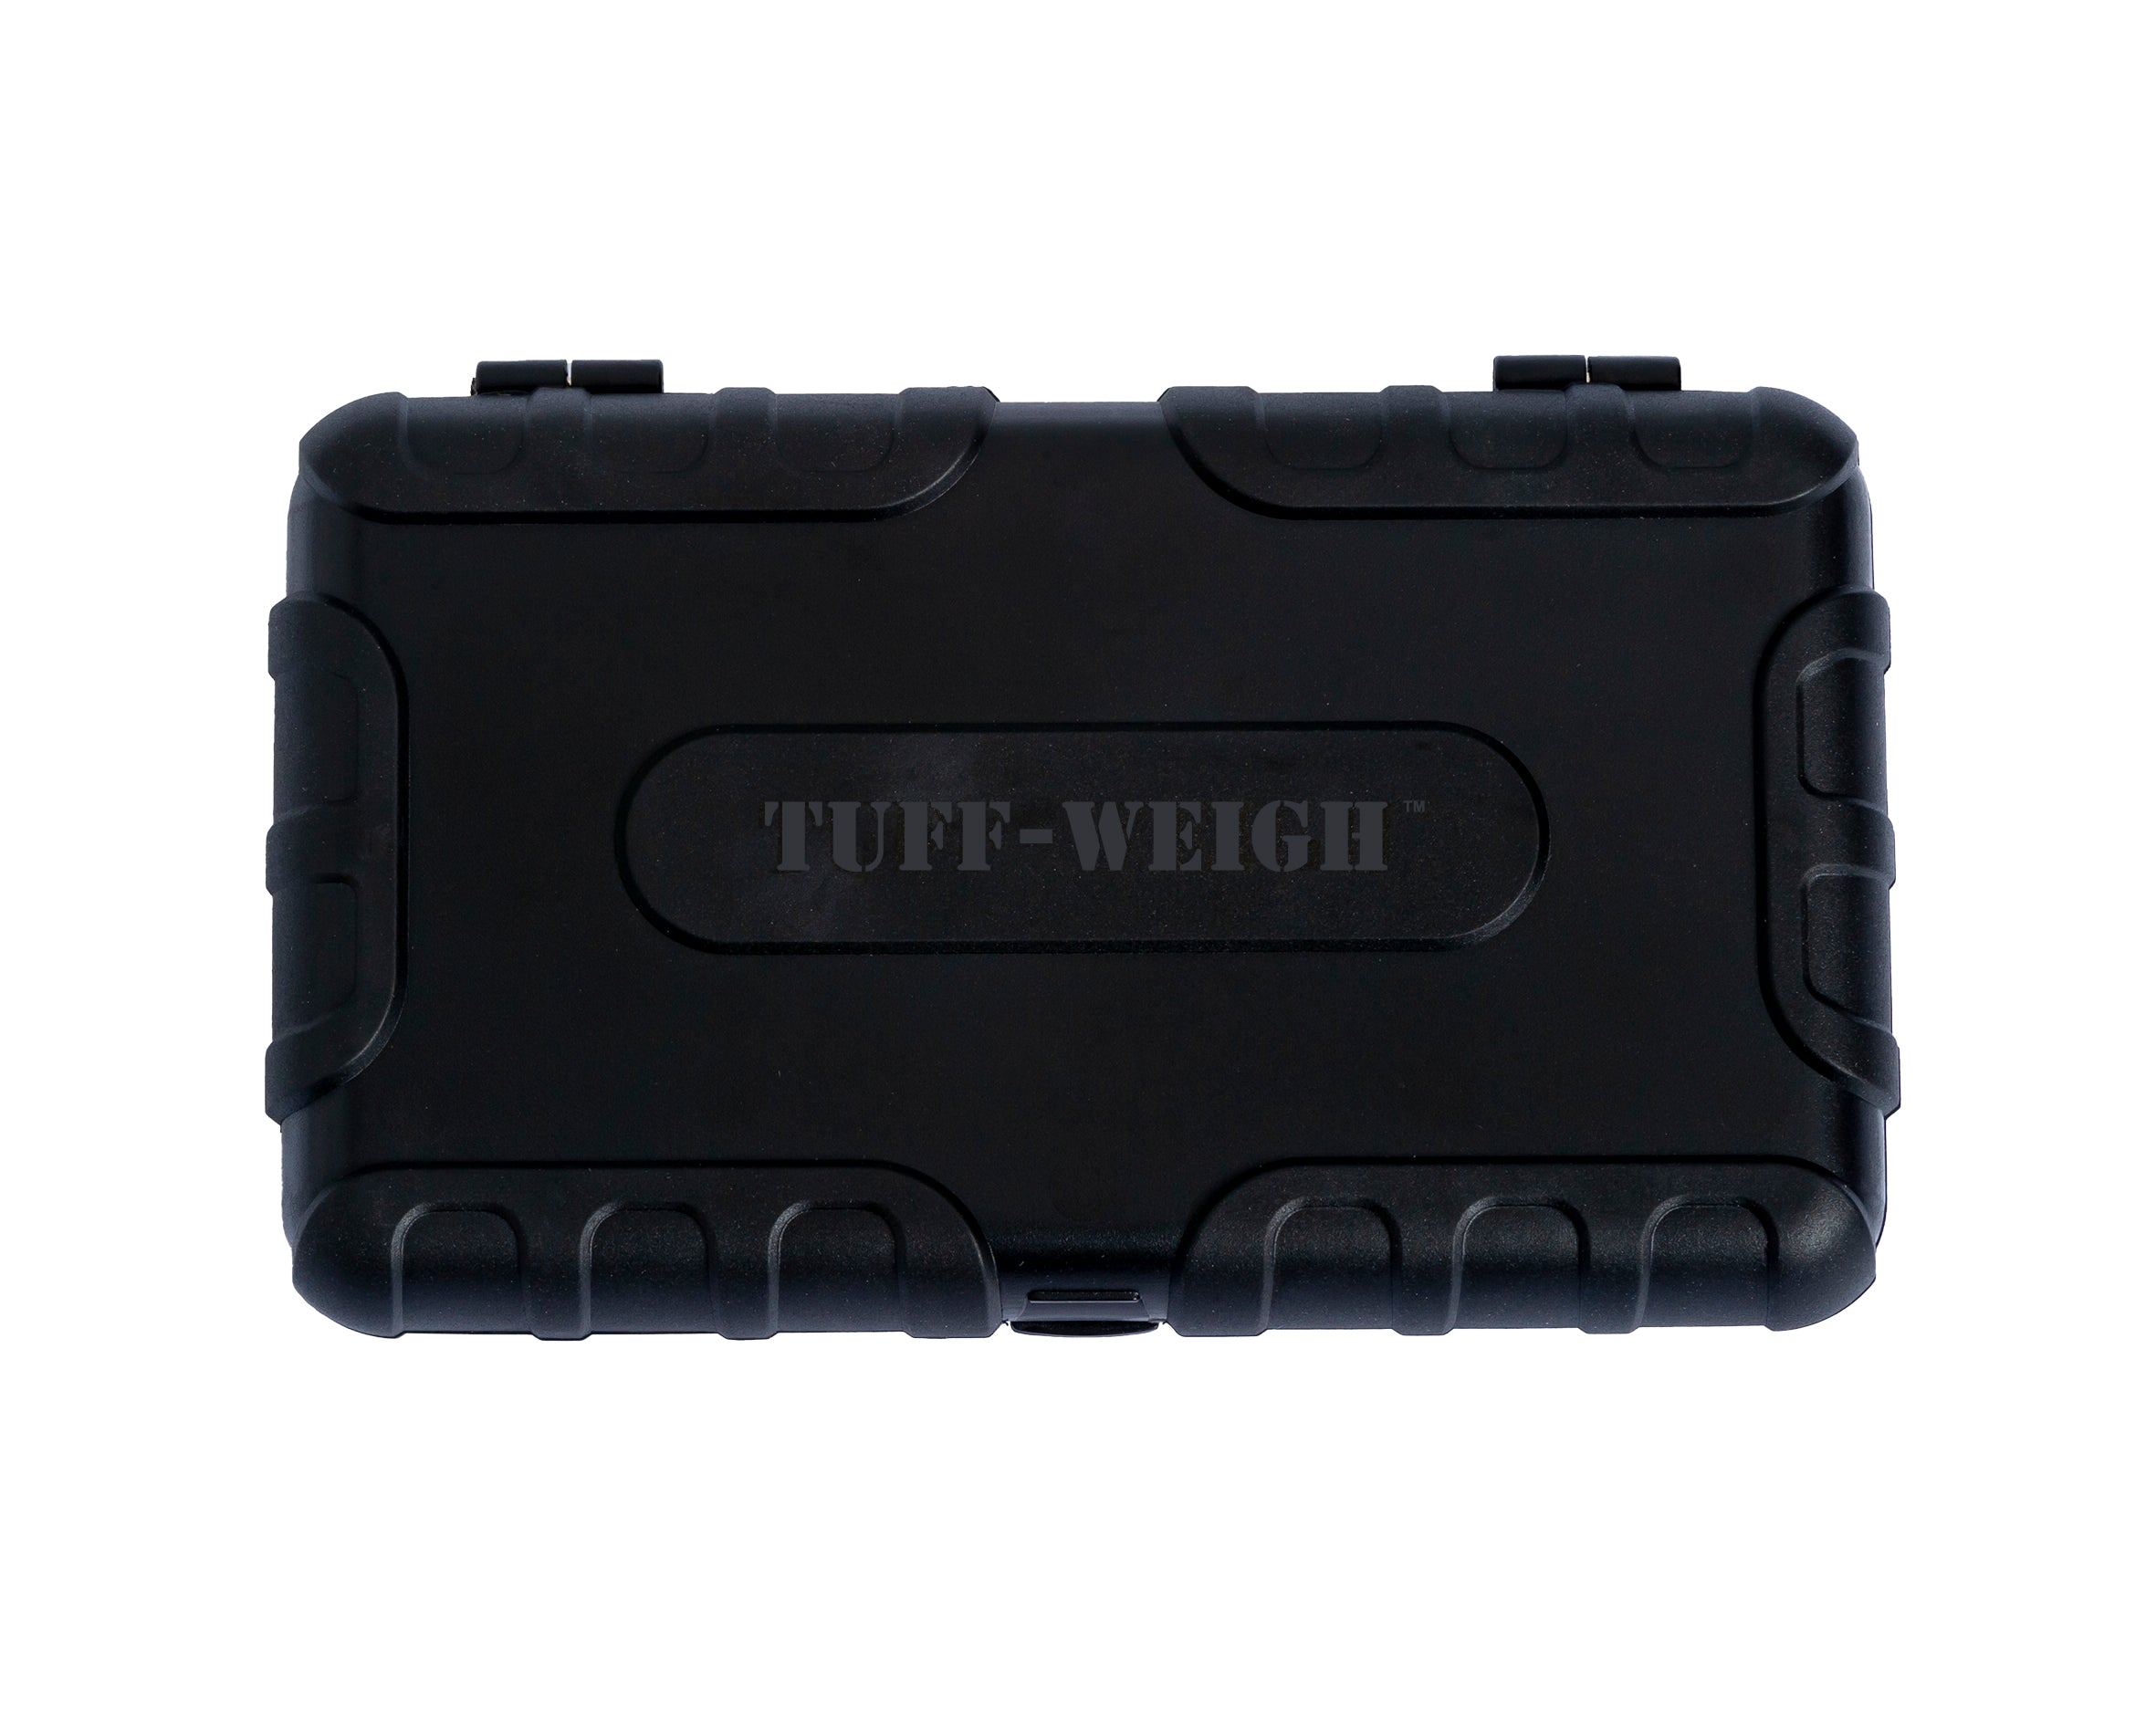 TUF-200-BK On Balance Tuff-Weigh Pocket Scale - Black 200g x 0.01g